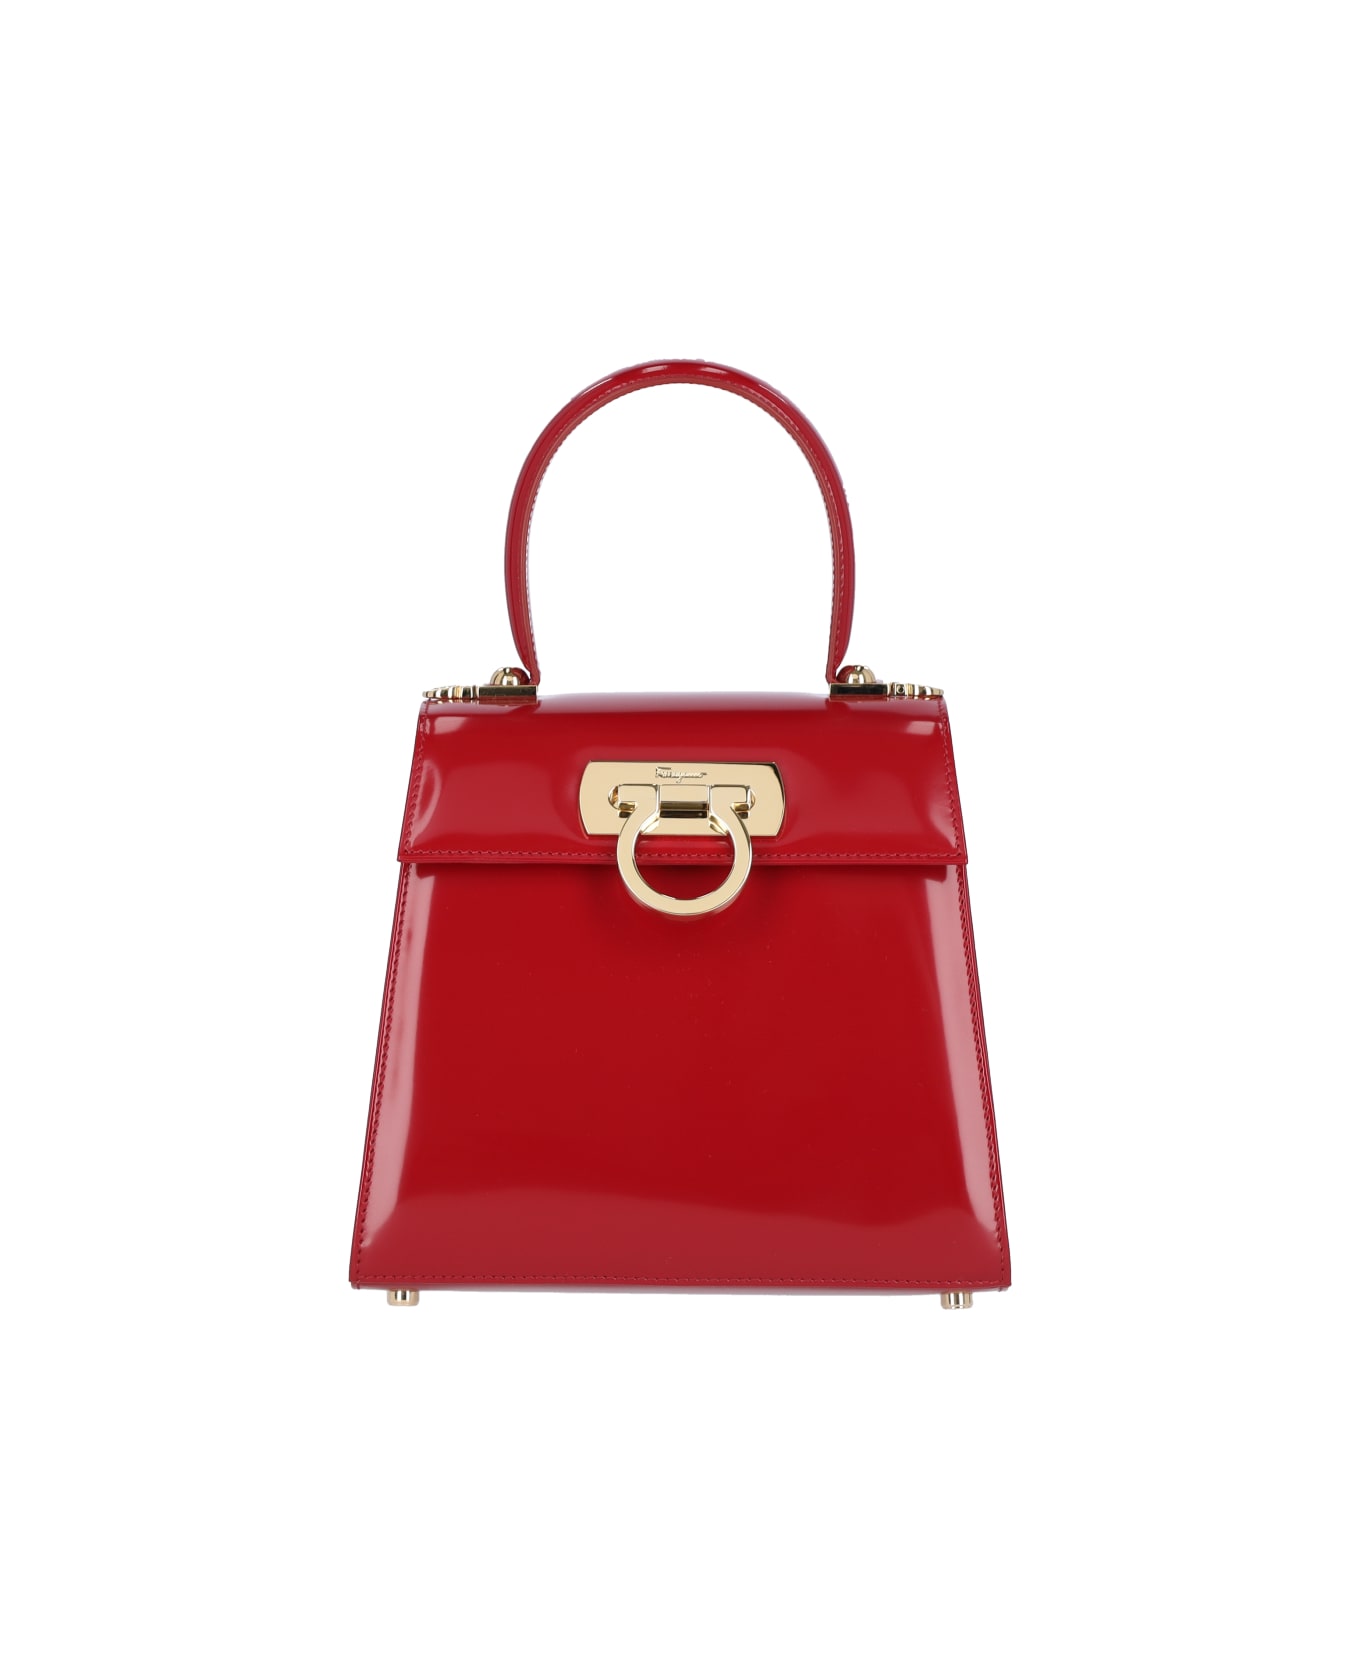 Ferragamo Iconic S Handbag - Red トートバッグ